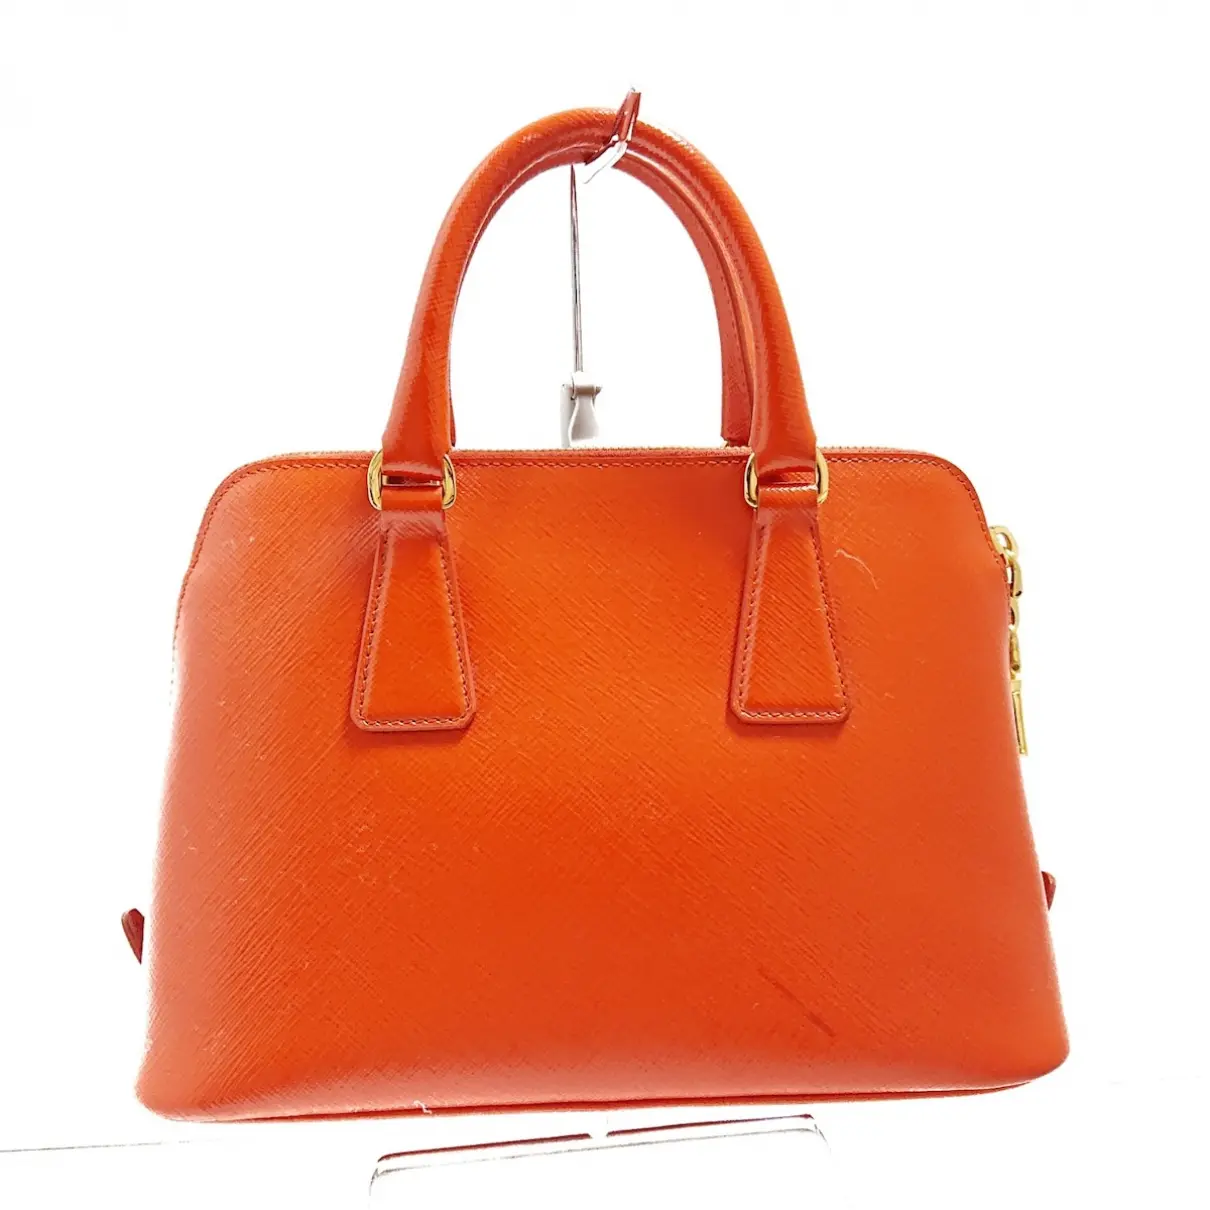 Buy Prada Galleria leather handbag online